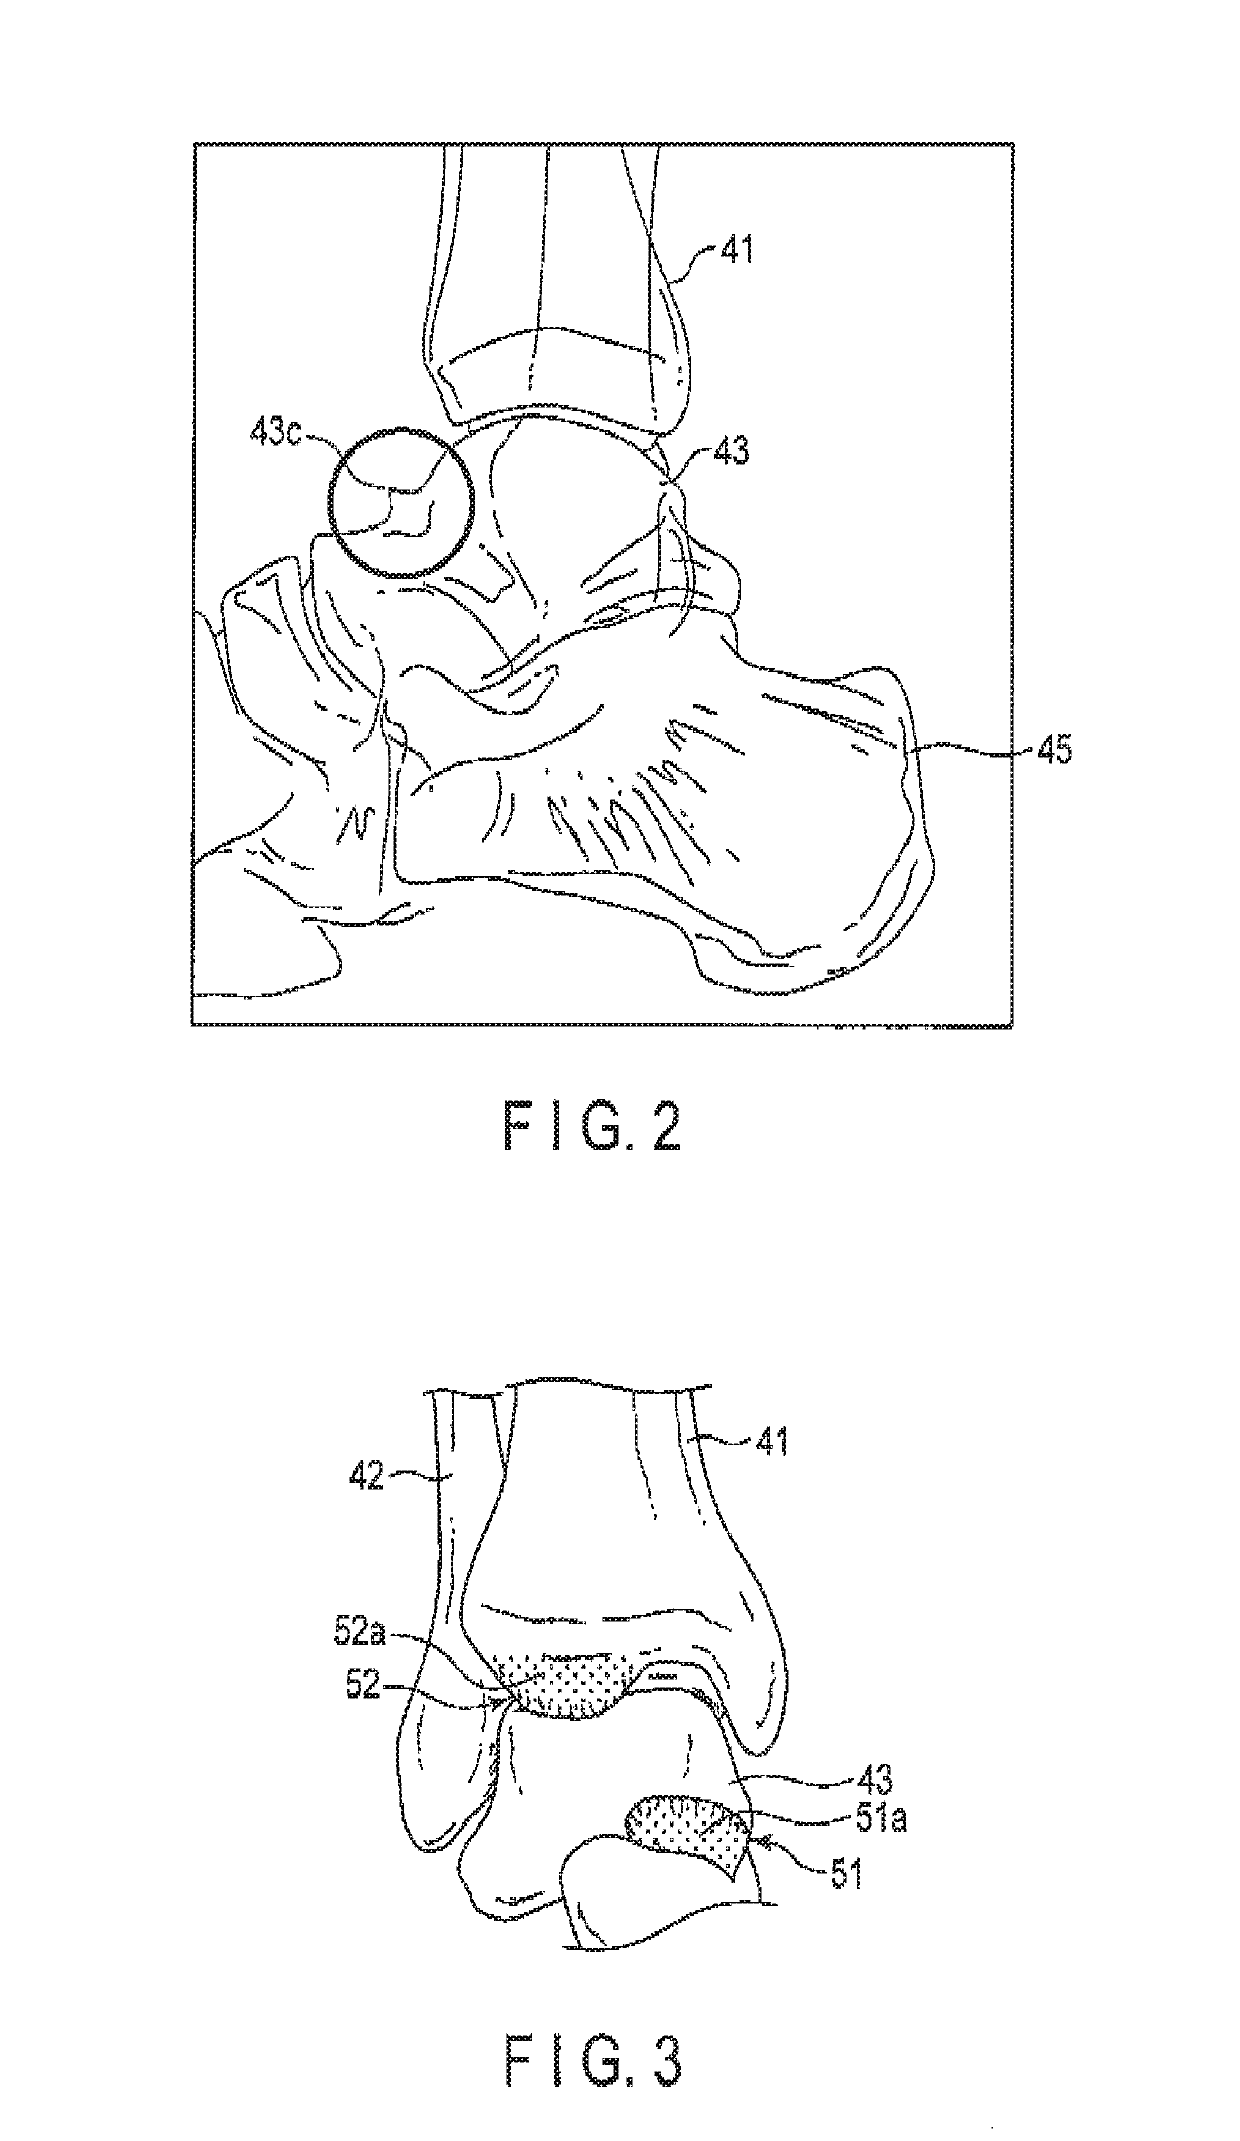 Arthroscopic surgery method for ankle impingement